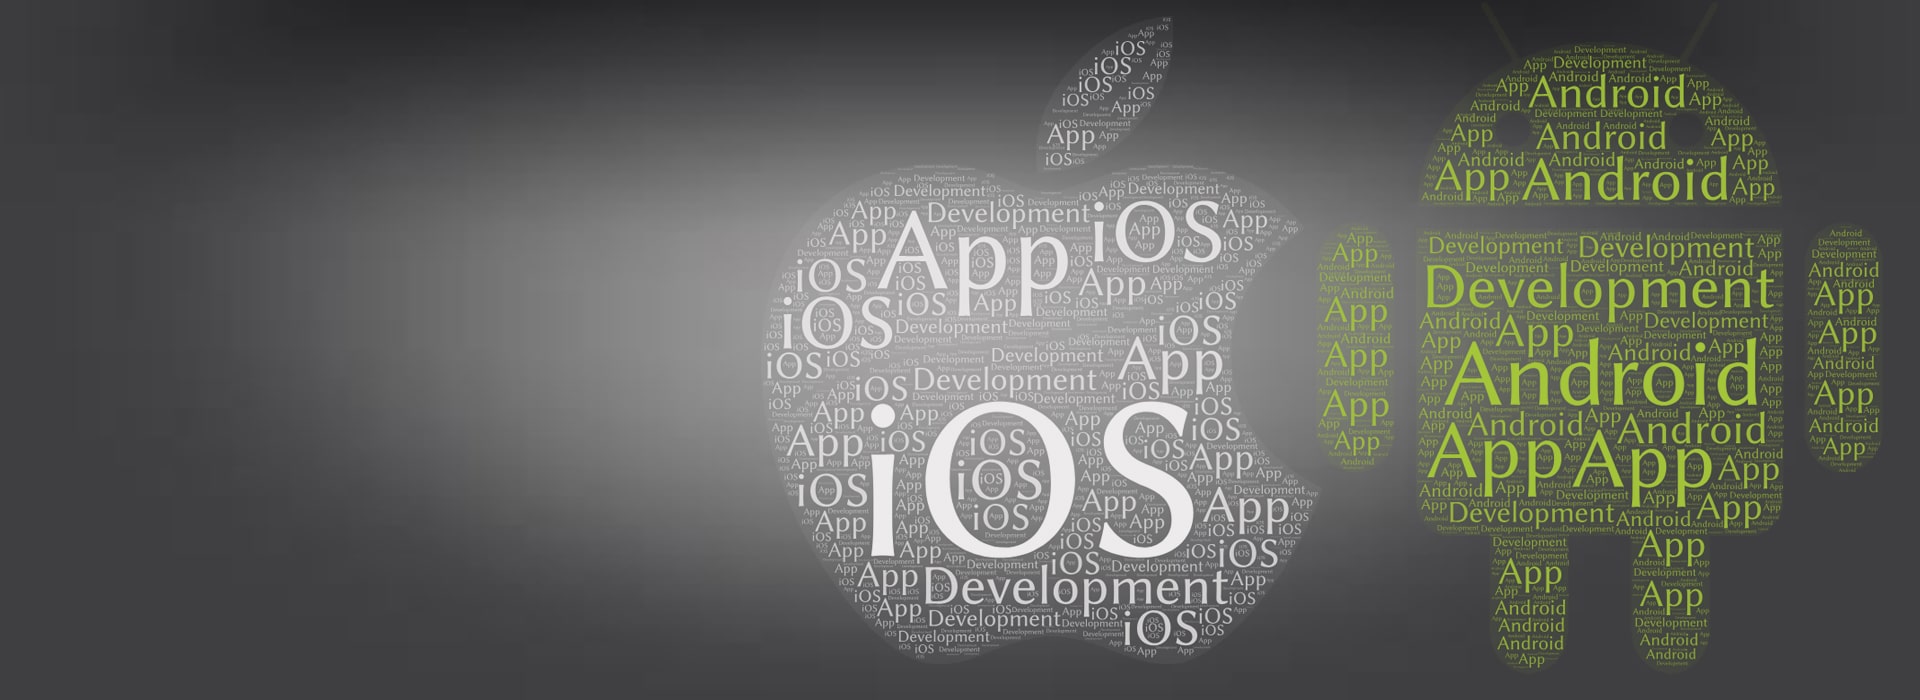 Mobile App Development - Evolve Inc